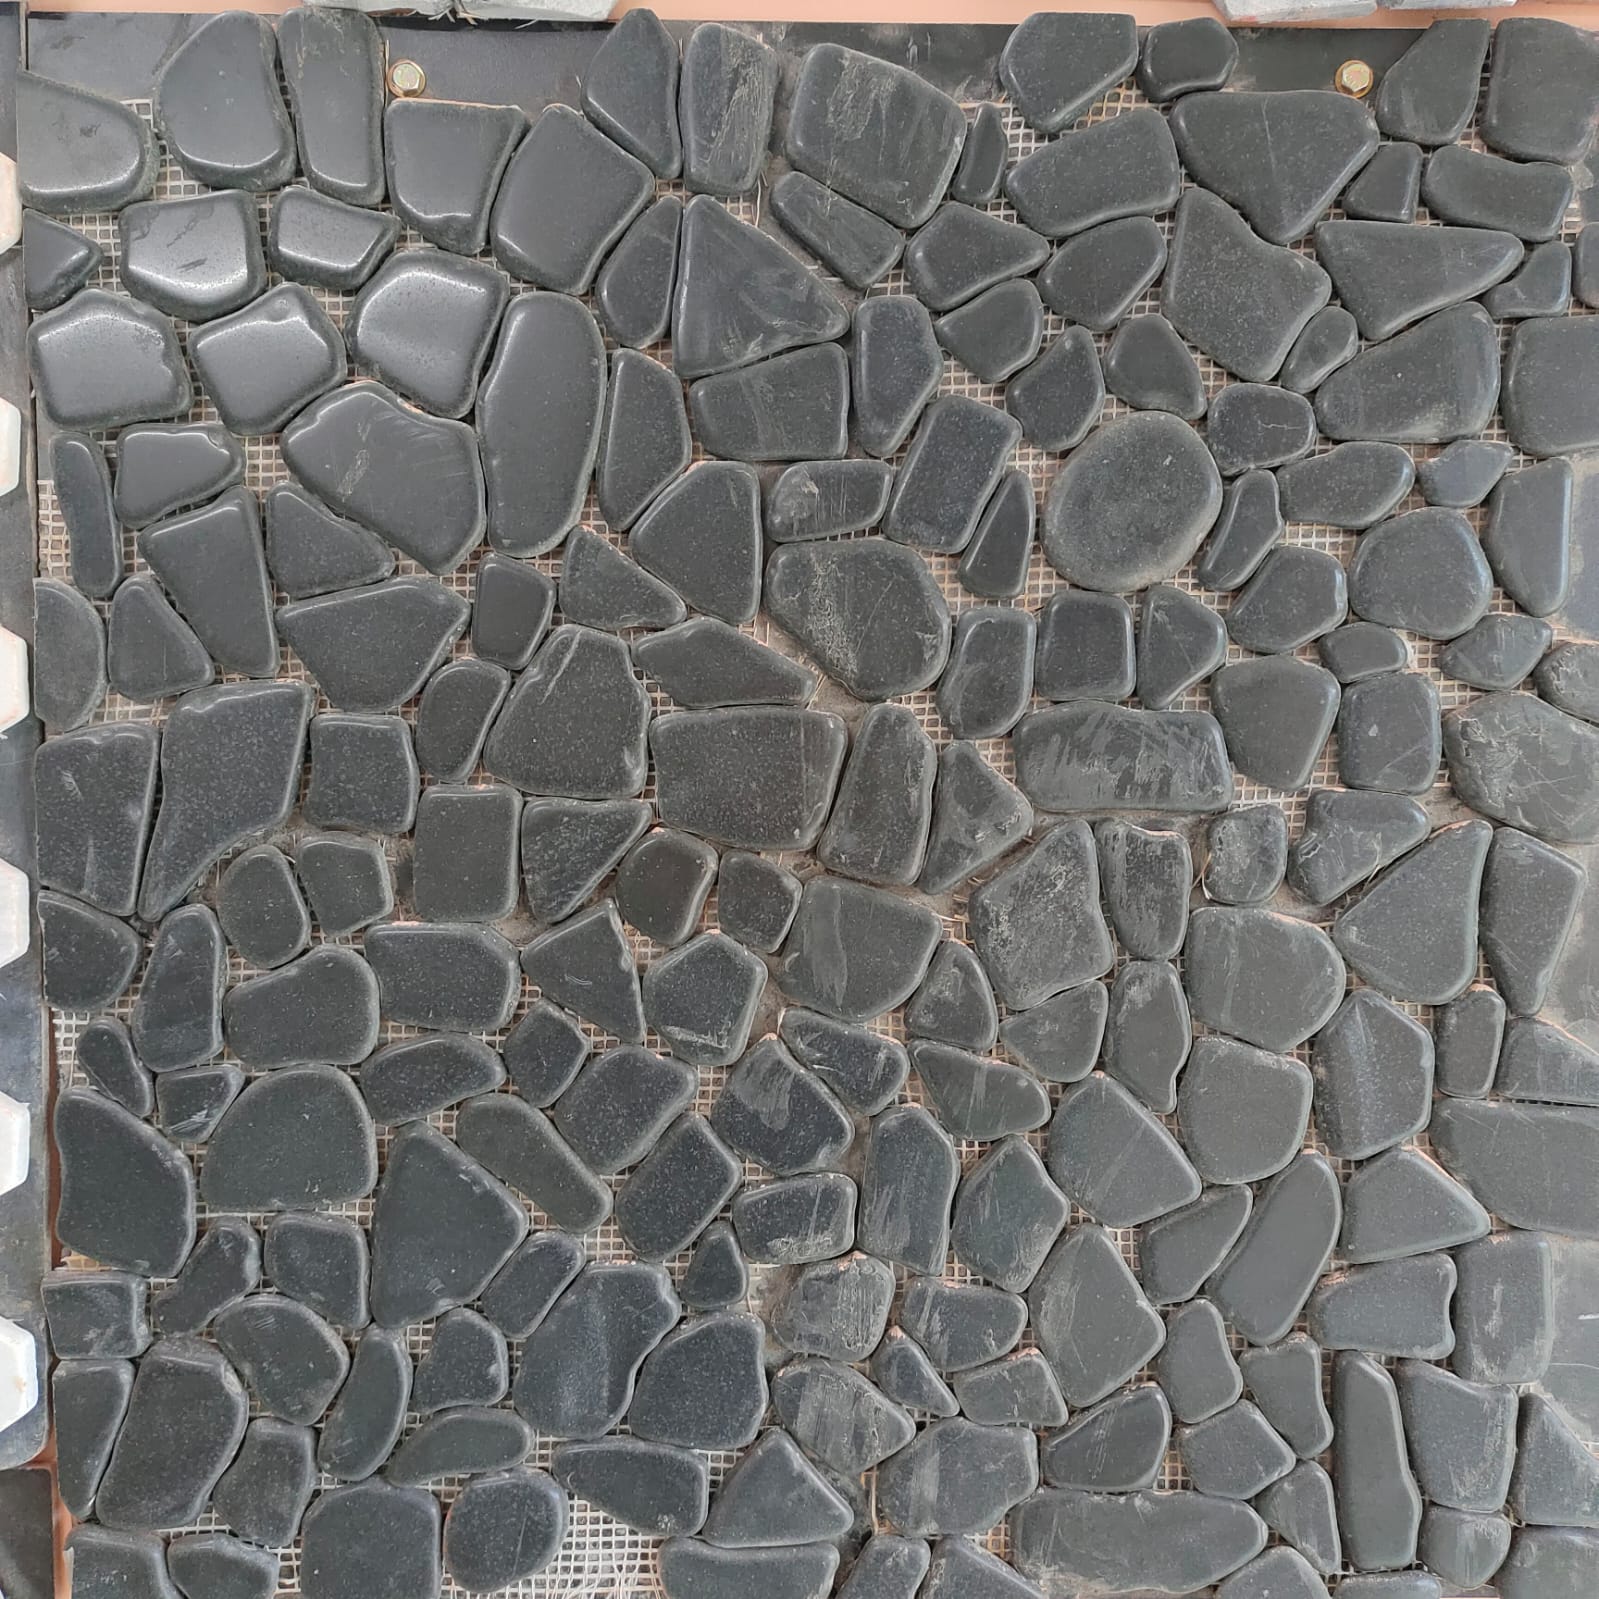 Natural Stone Tile